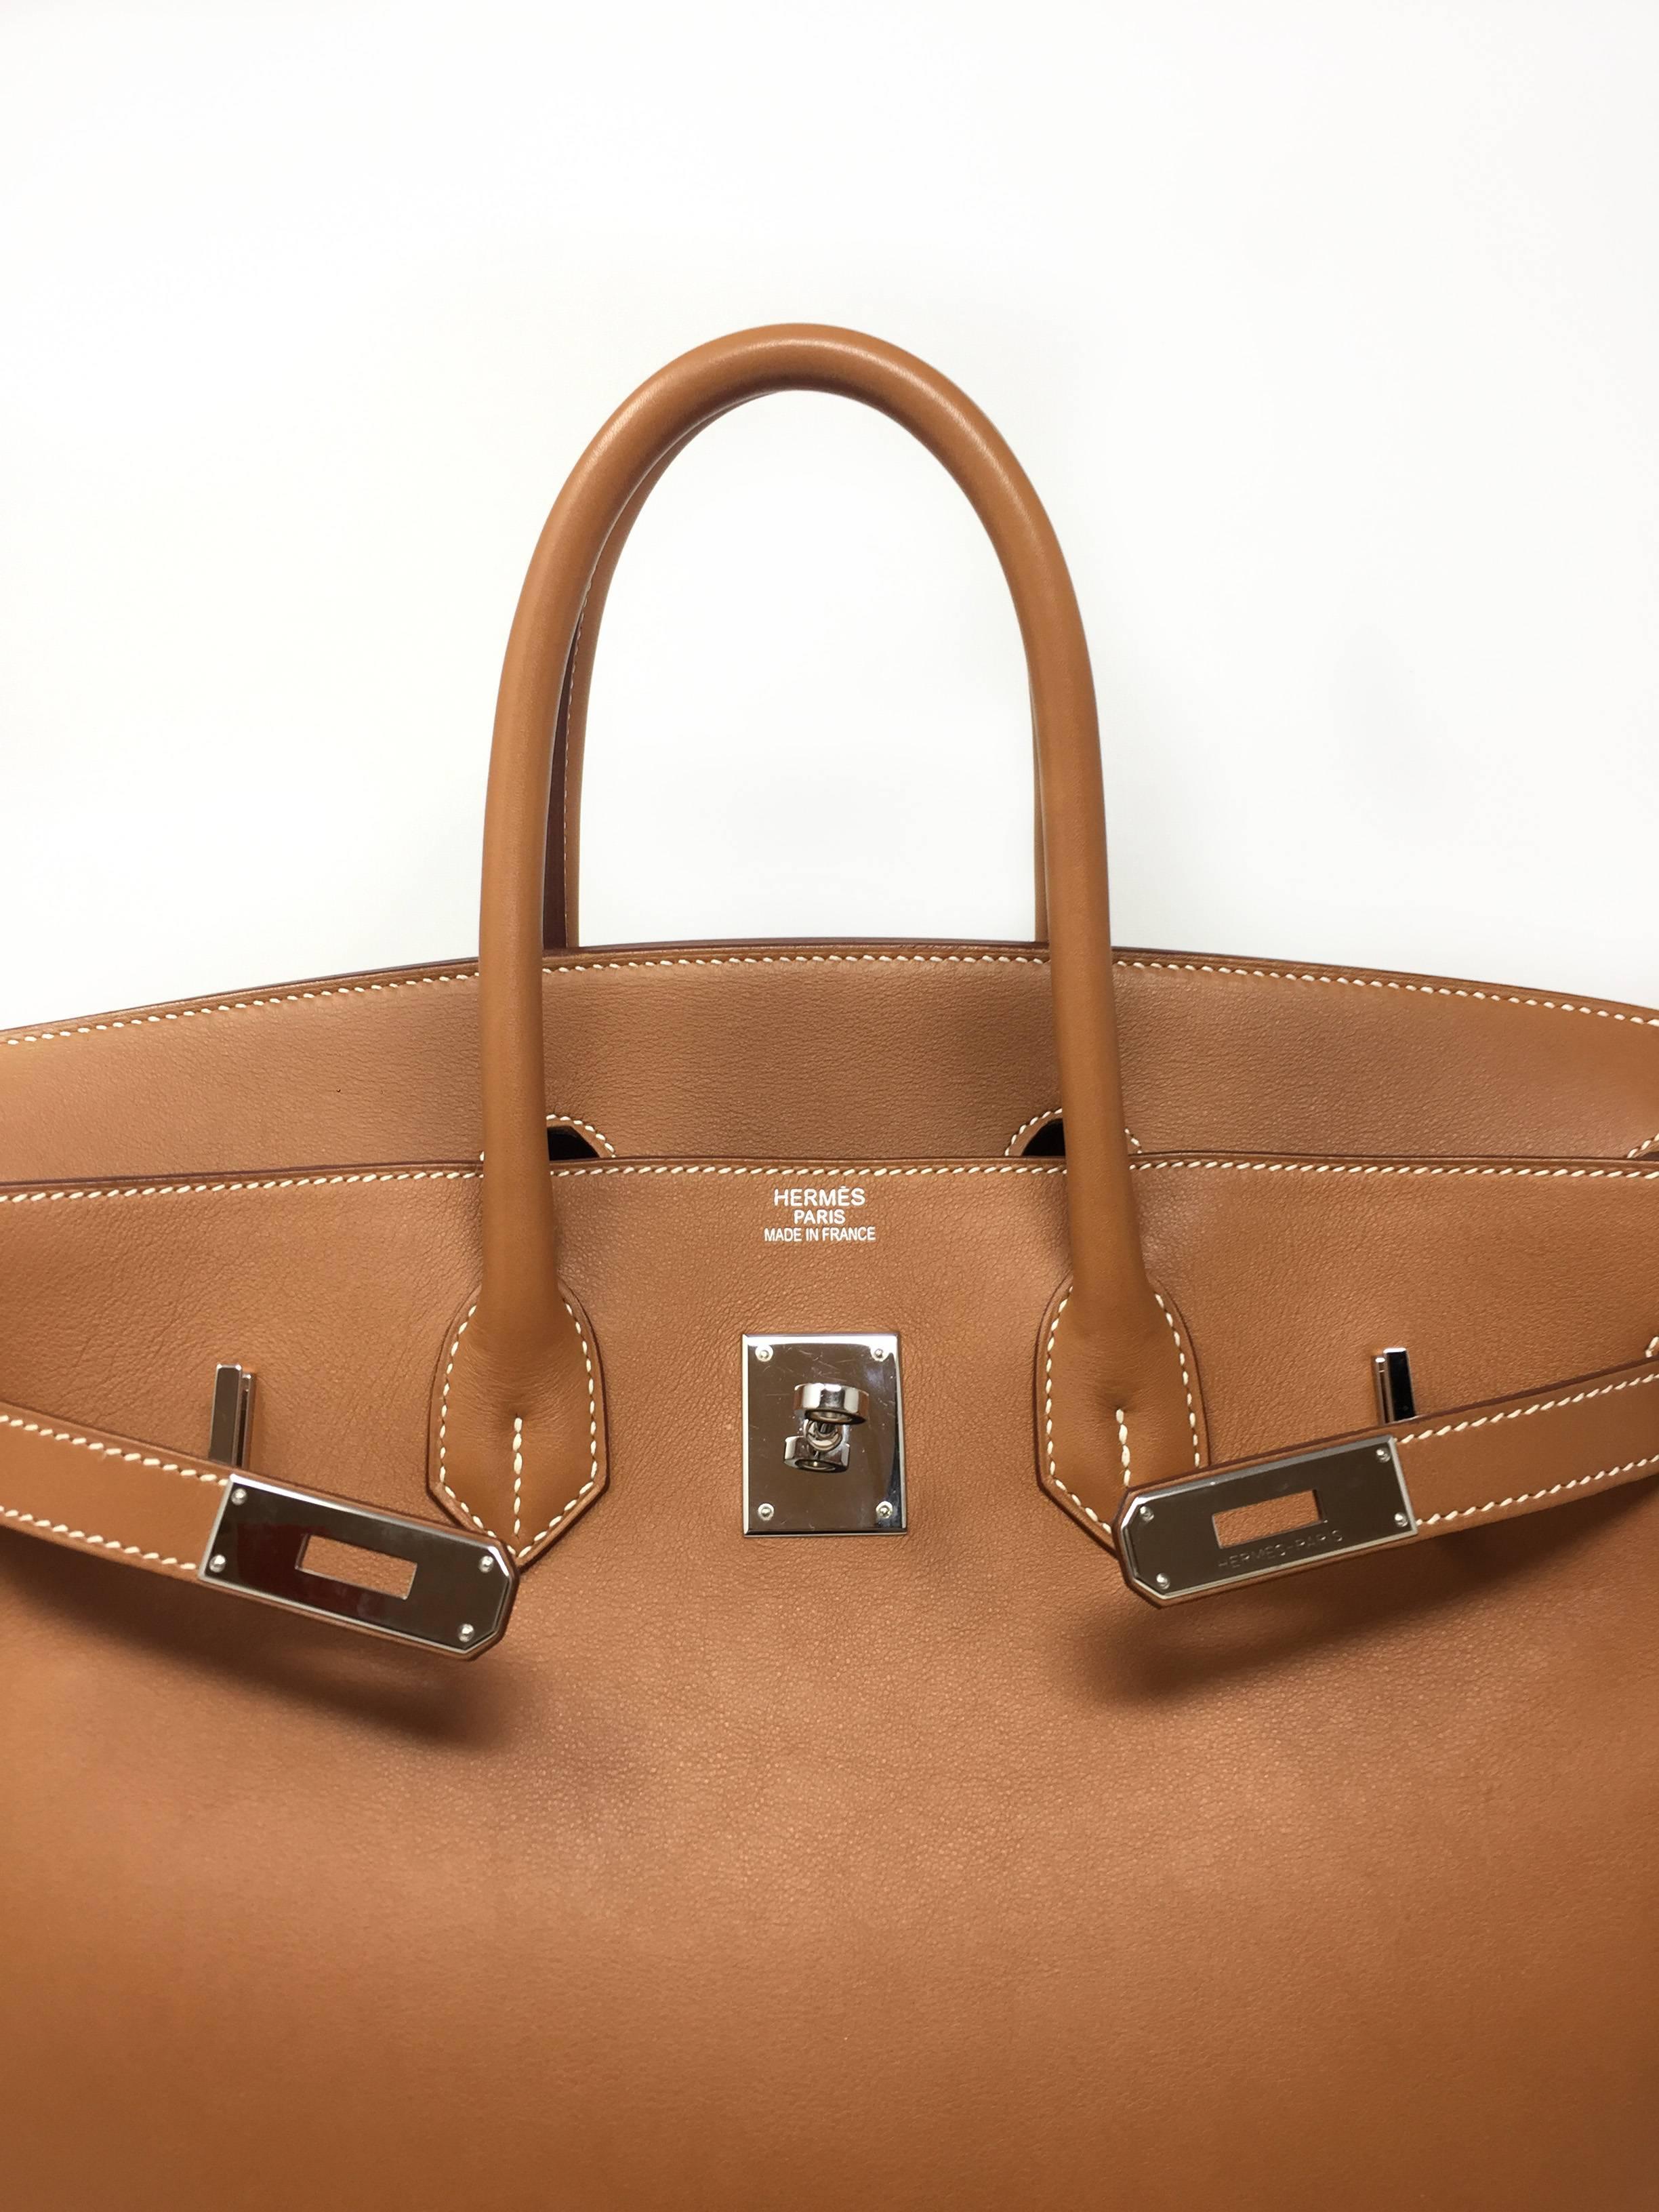 Hermes Paris Sac Birkin 35 Swift Gold Leather Bag, 2008 1